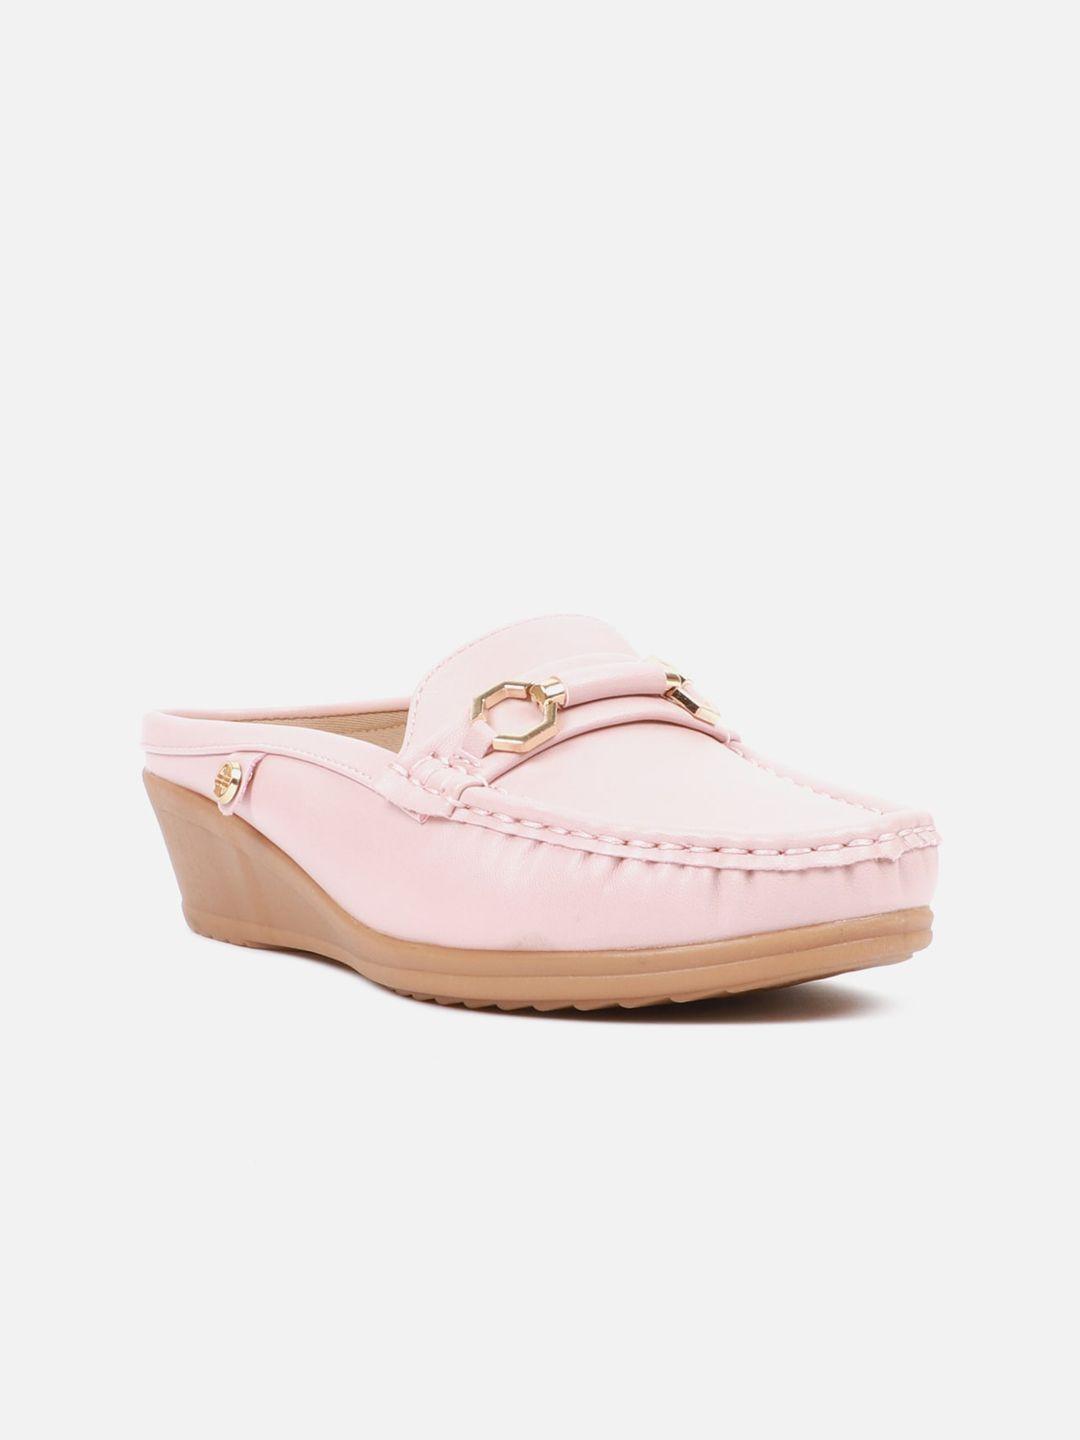 carlton london women pink loafers